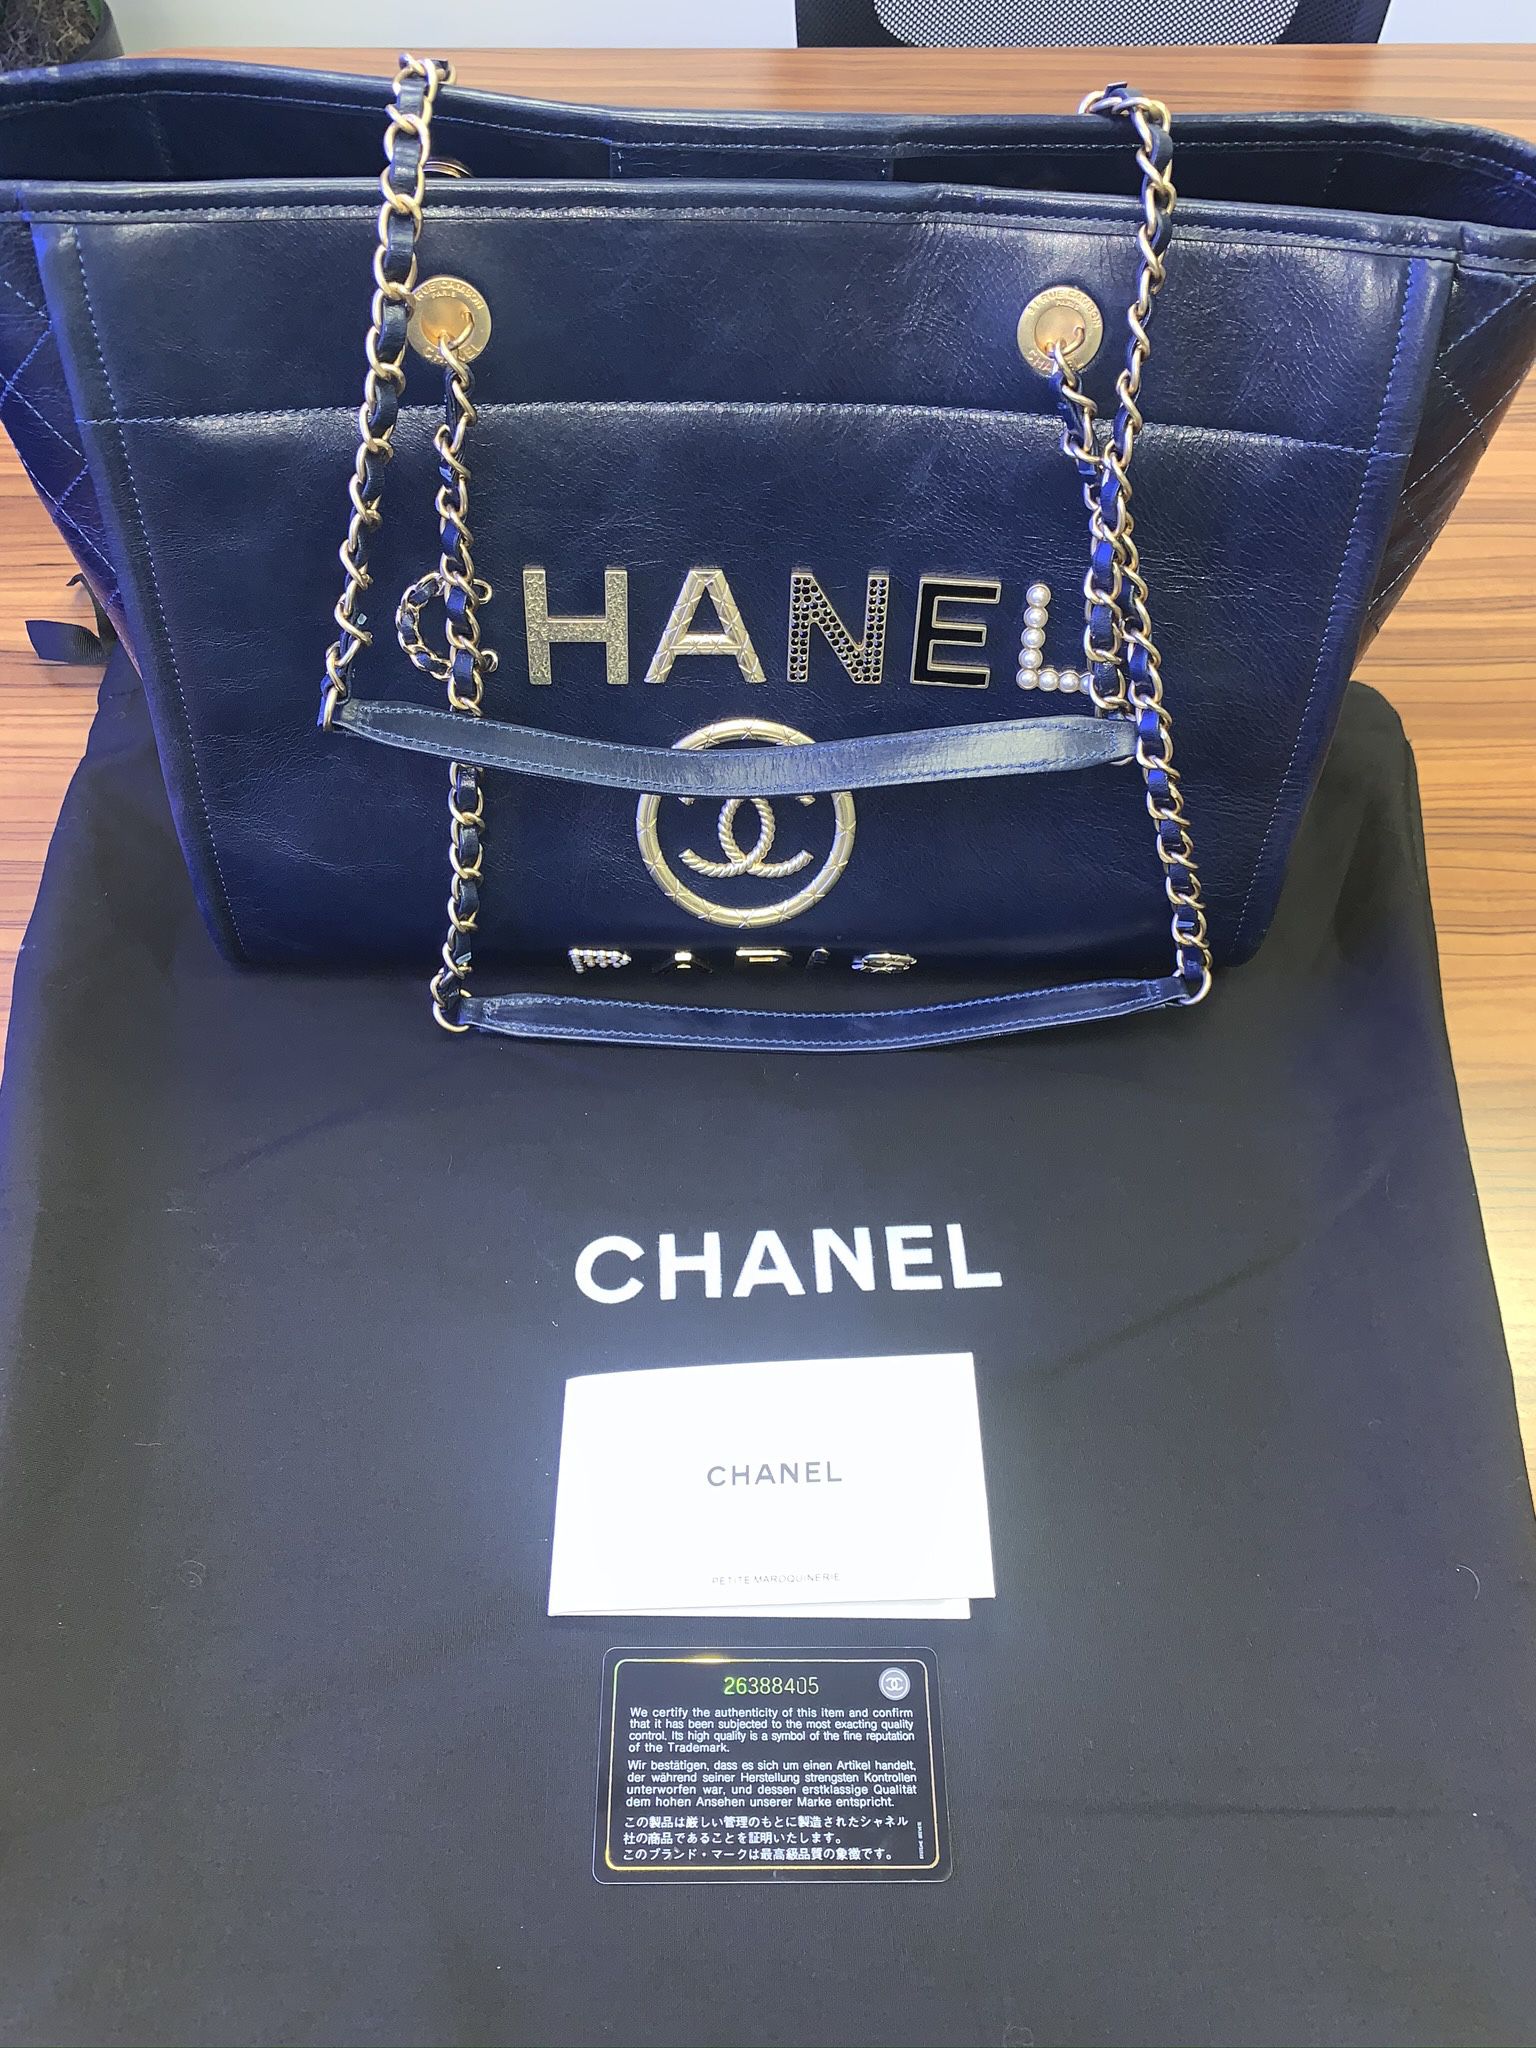 Chanel Blue Leather Handbag Authentic